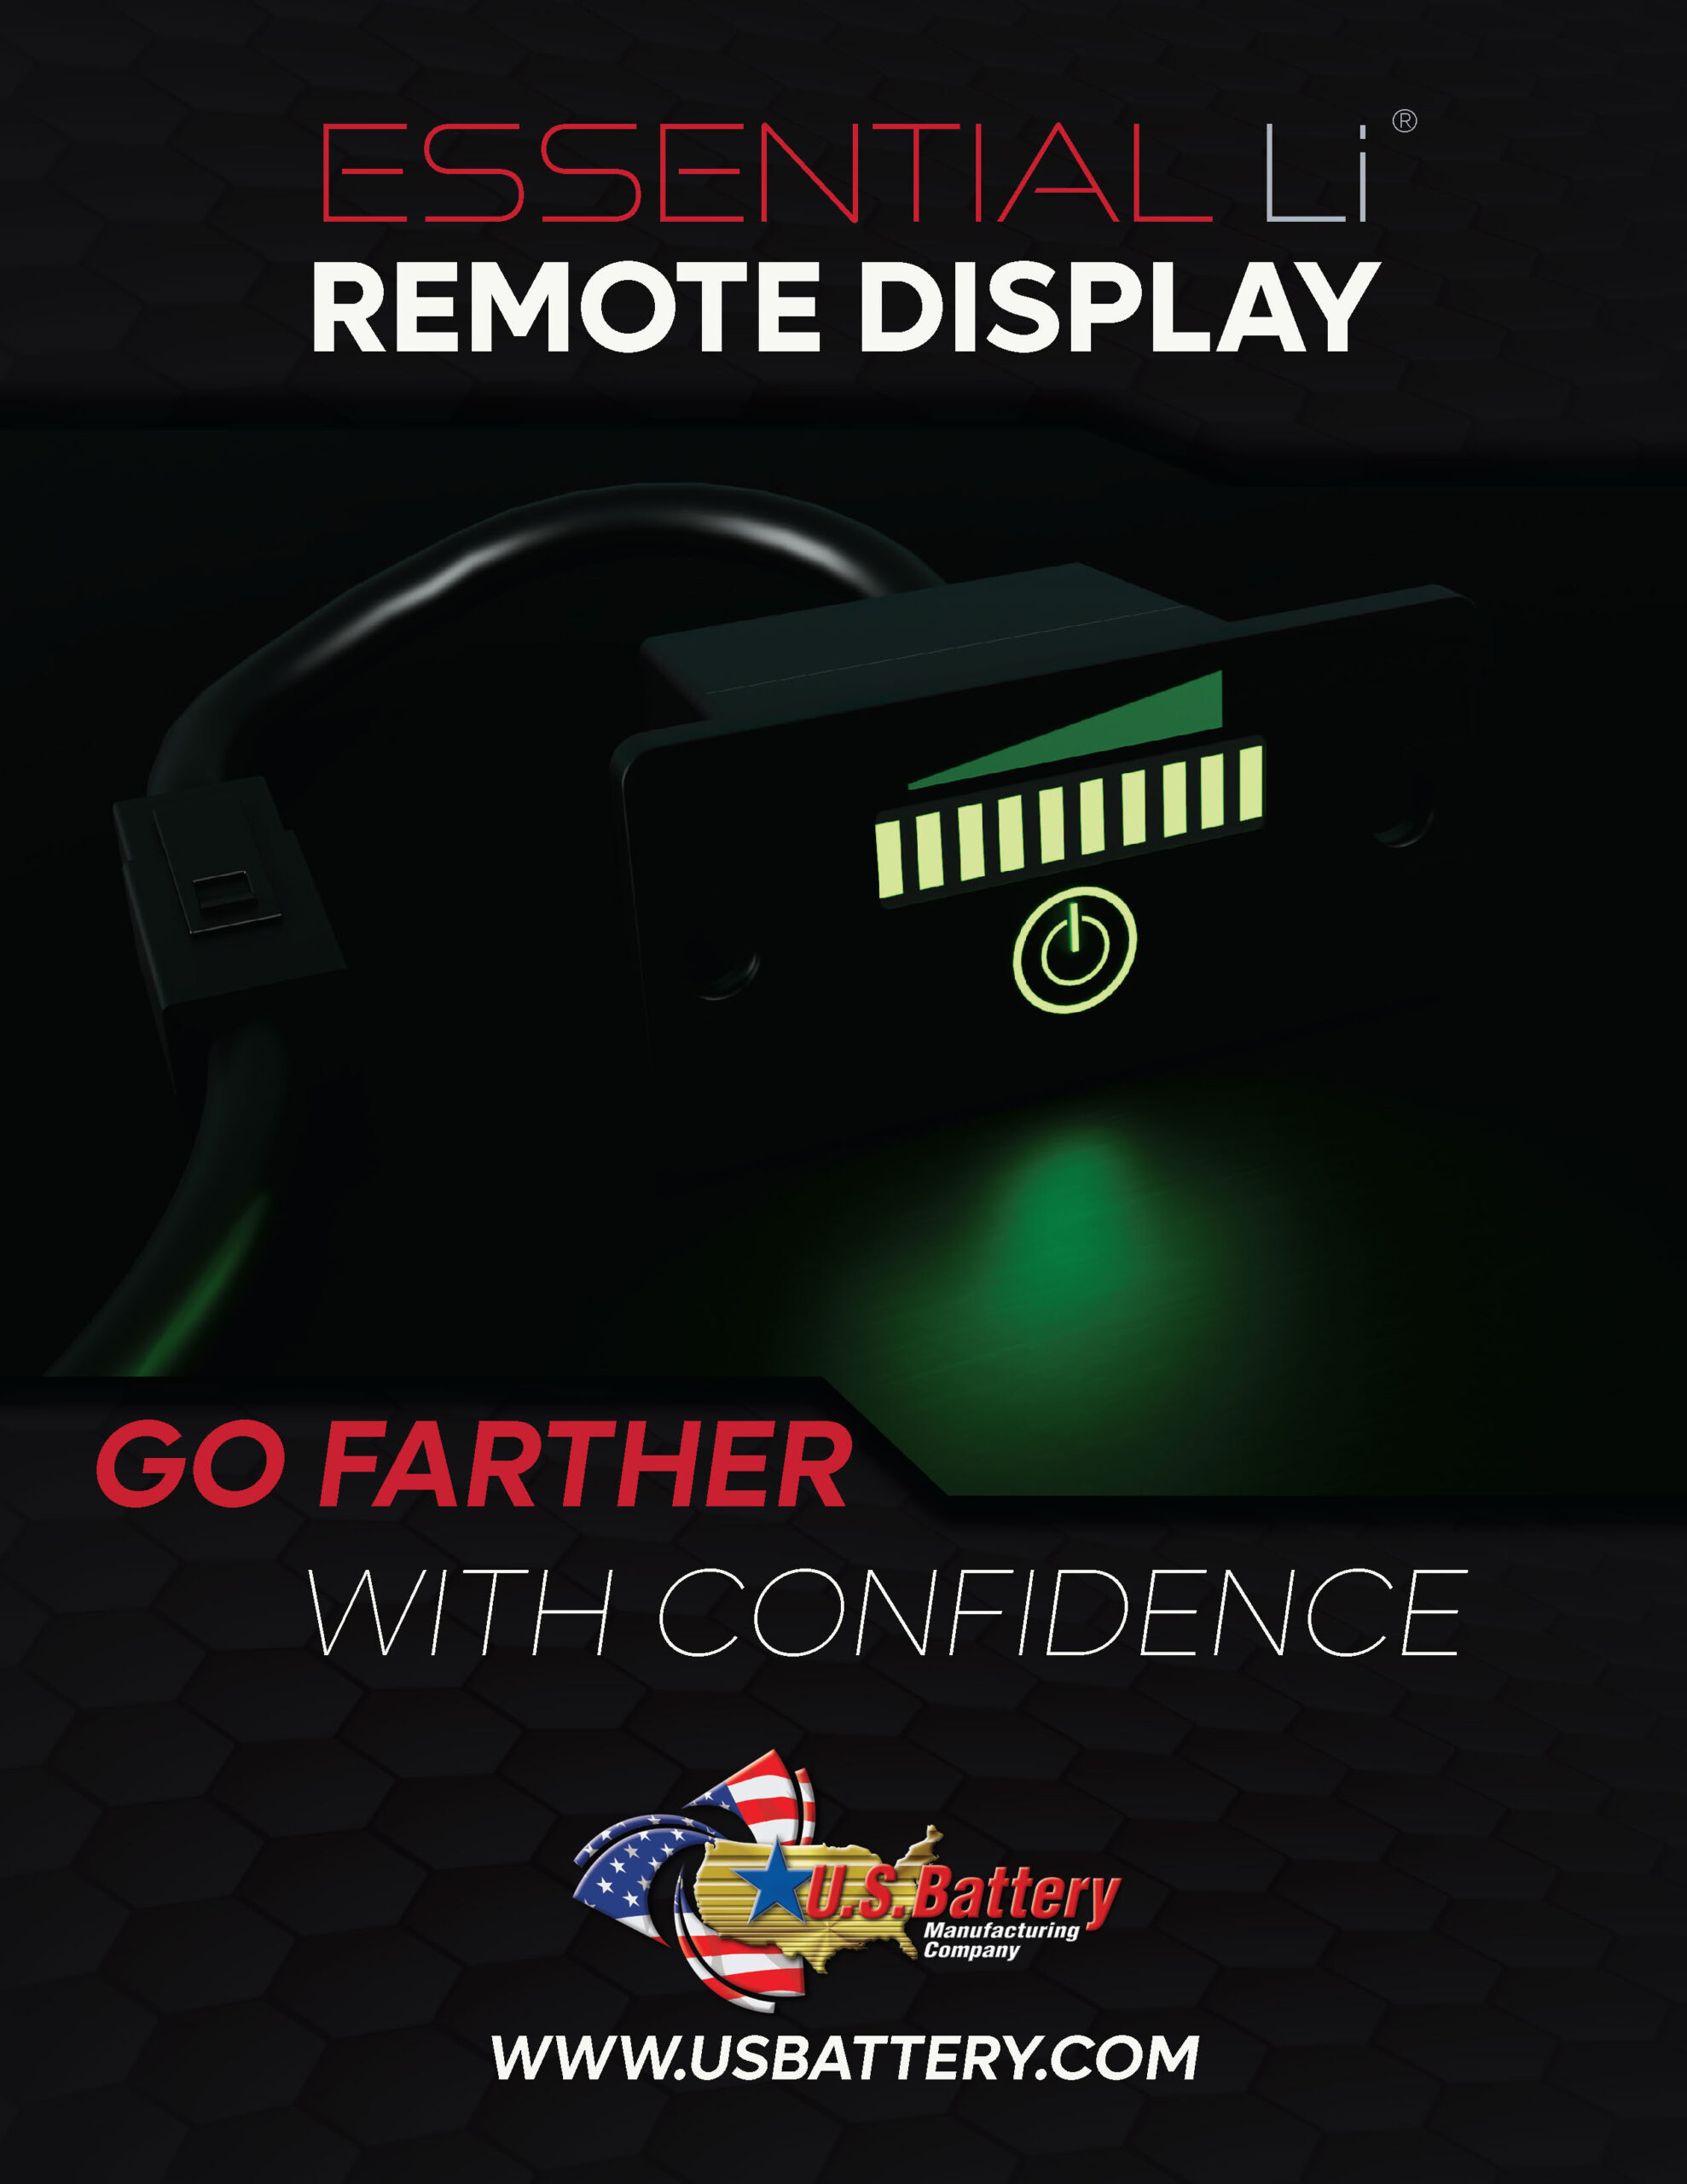 Remote Display Flyer